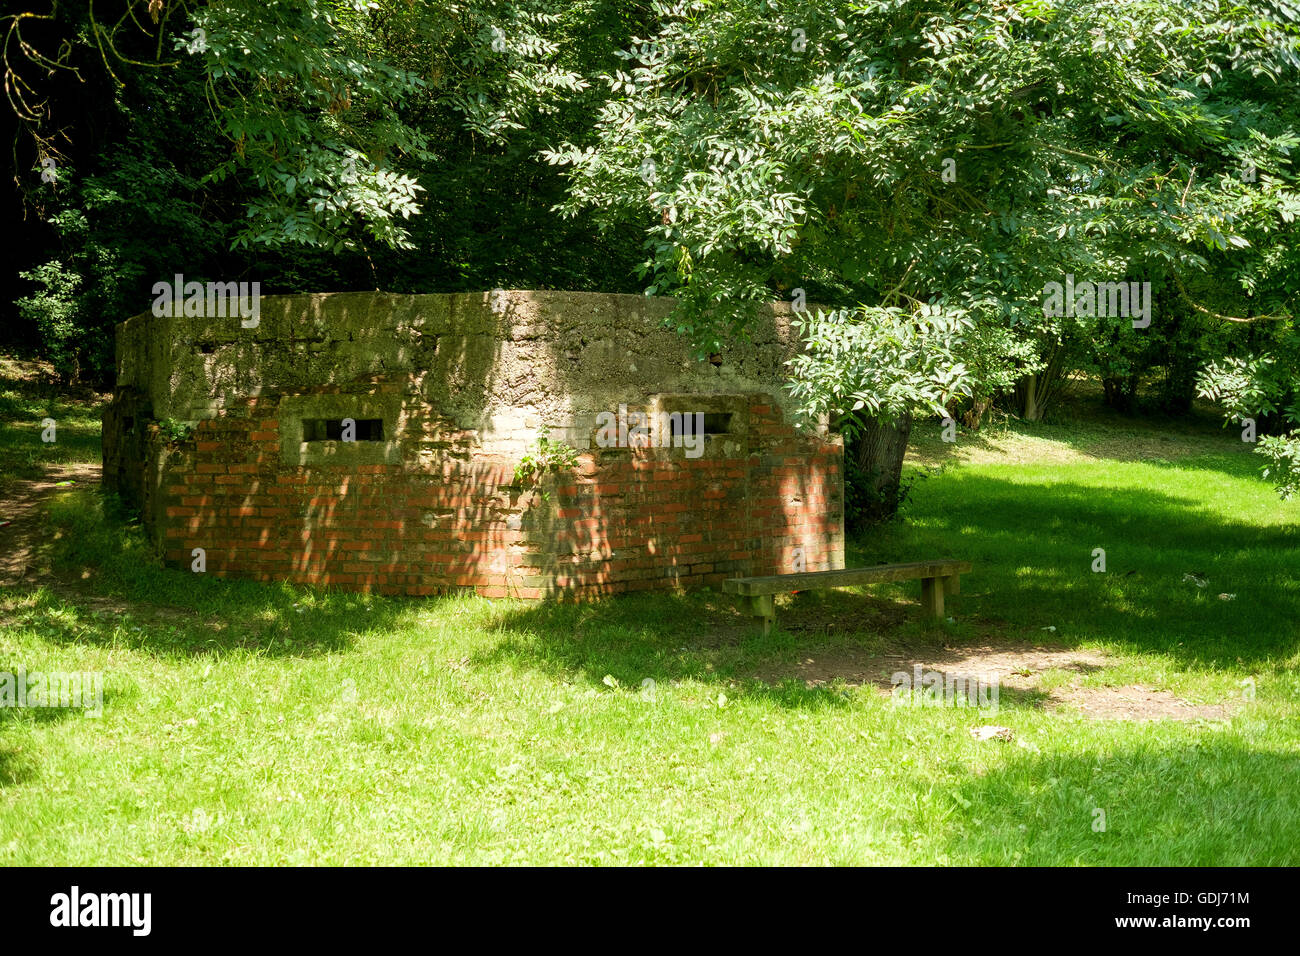 WW2 Bunker besides River Mole just outside village of Brockham, Surrey, UK Stock Photo